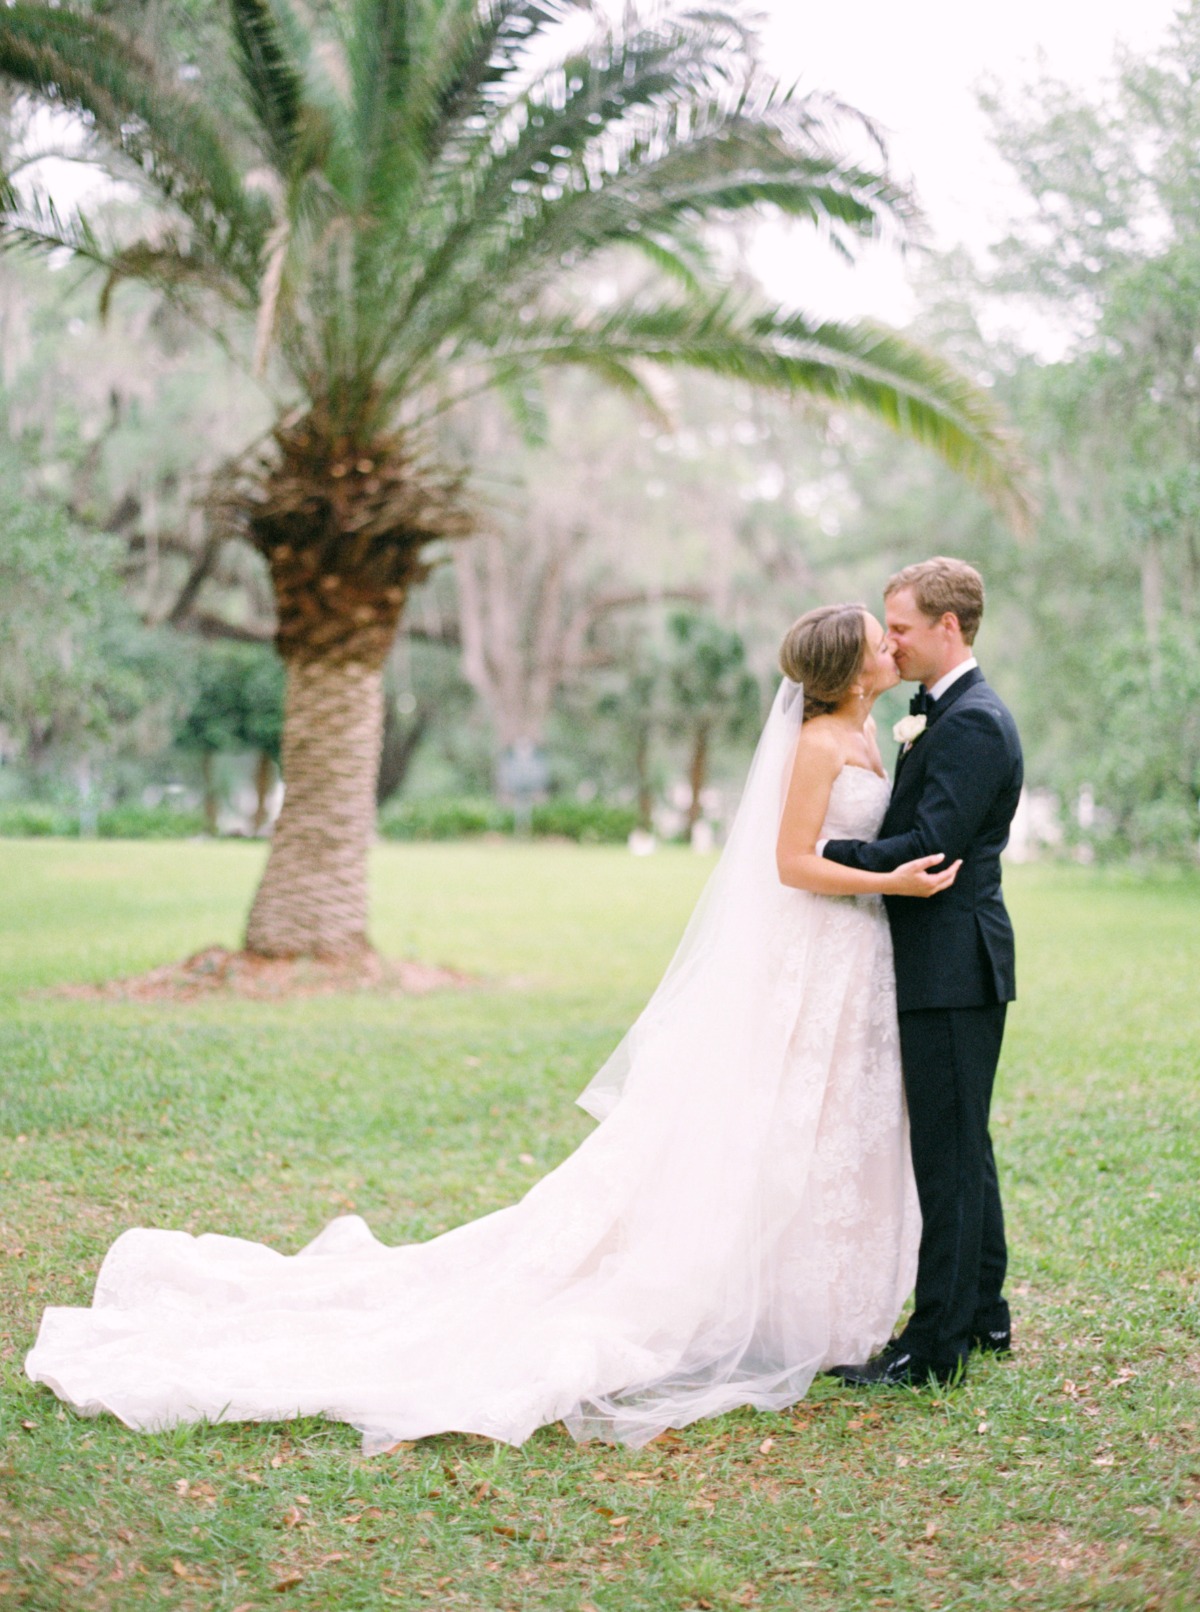 Florida newlyweds kiss by palm trees